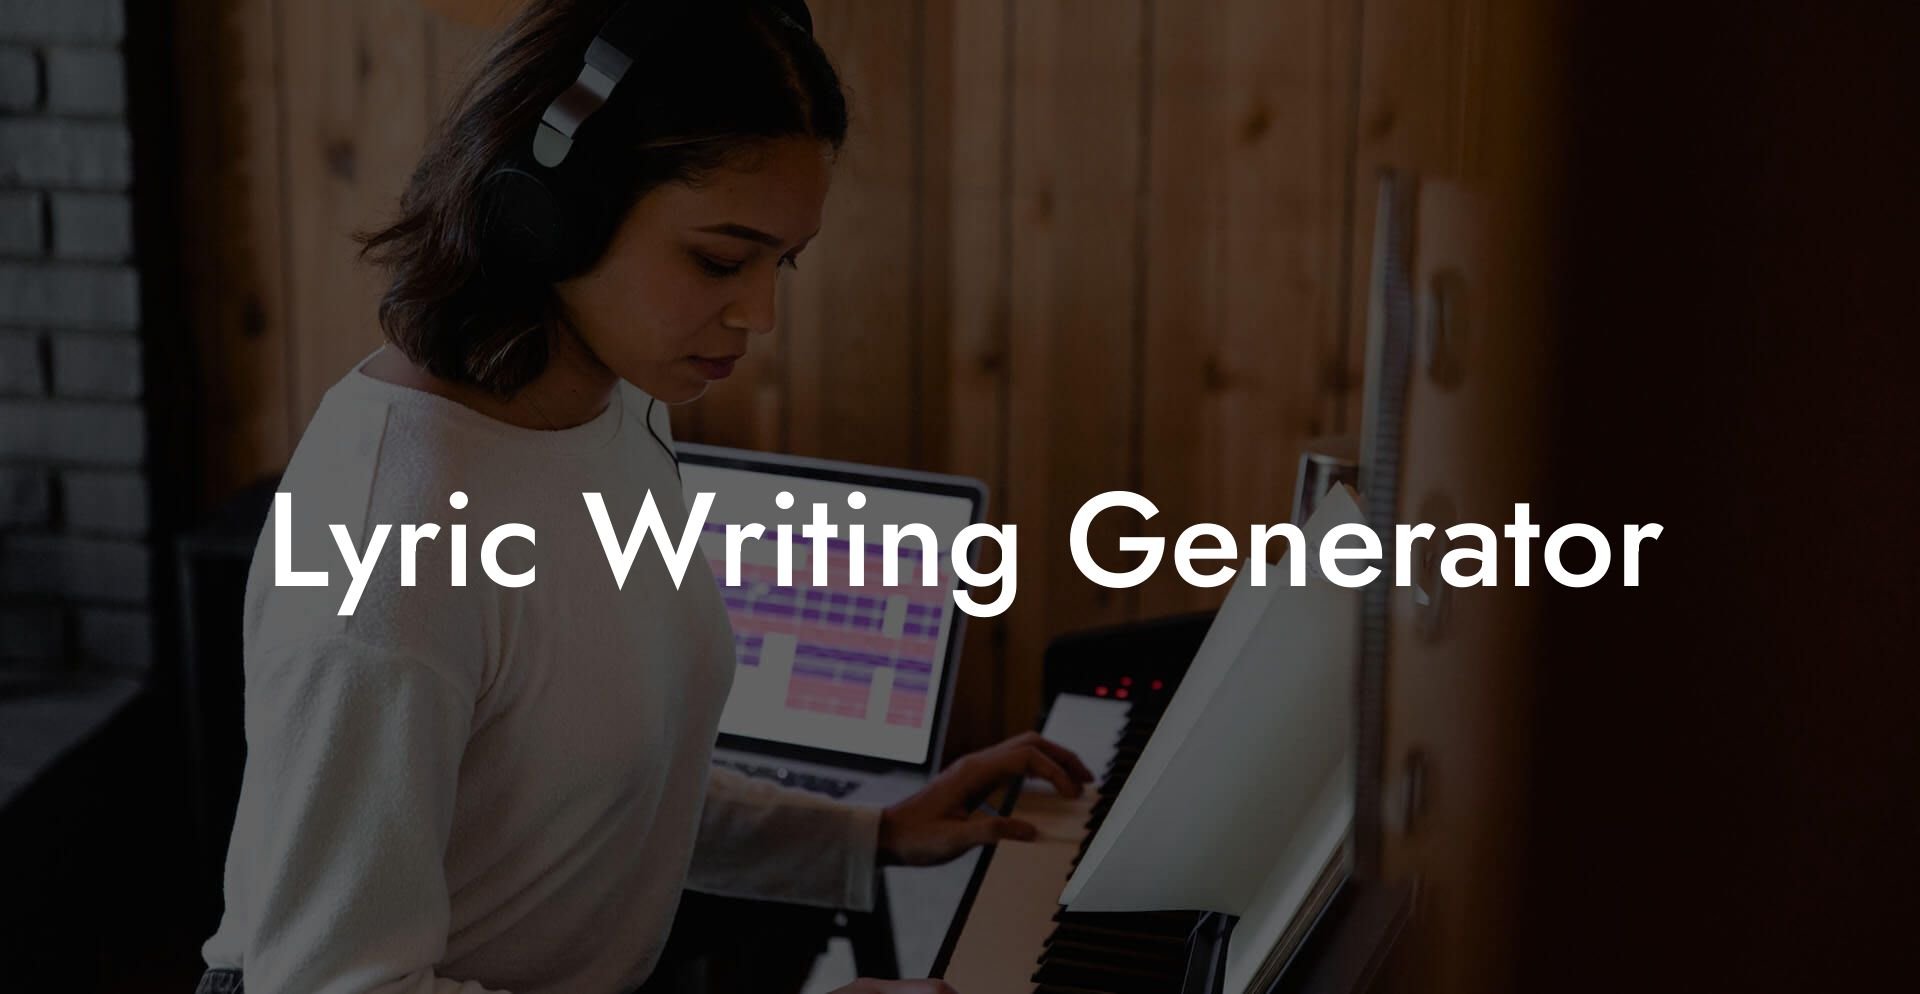 lyric writing generator lyric assistant